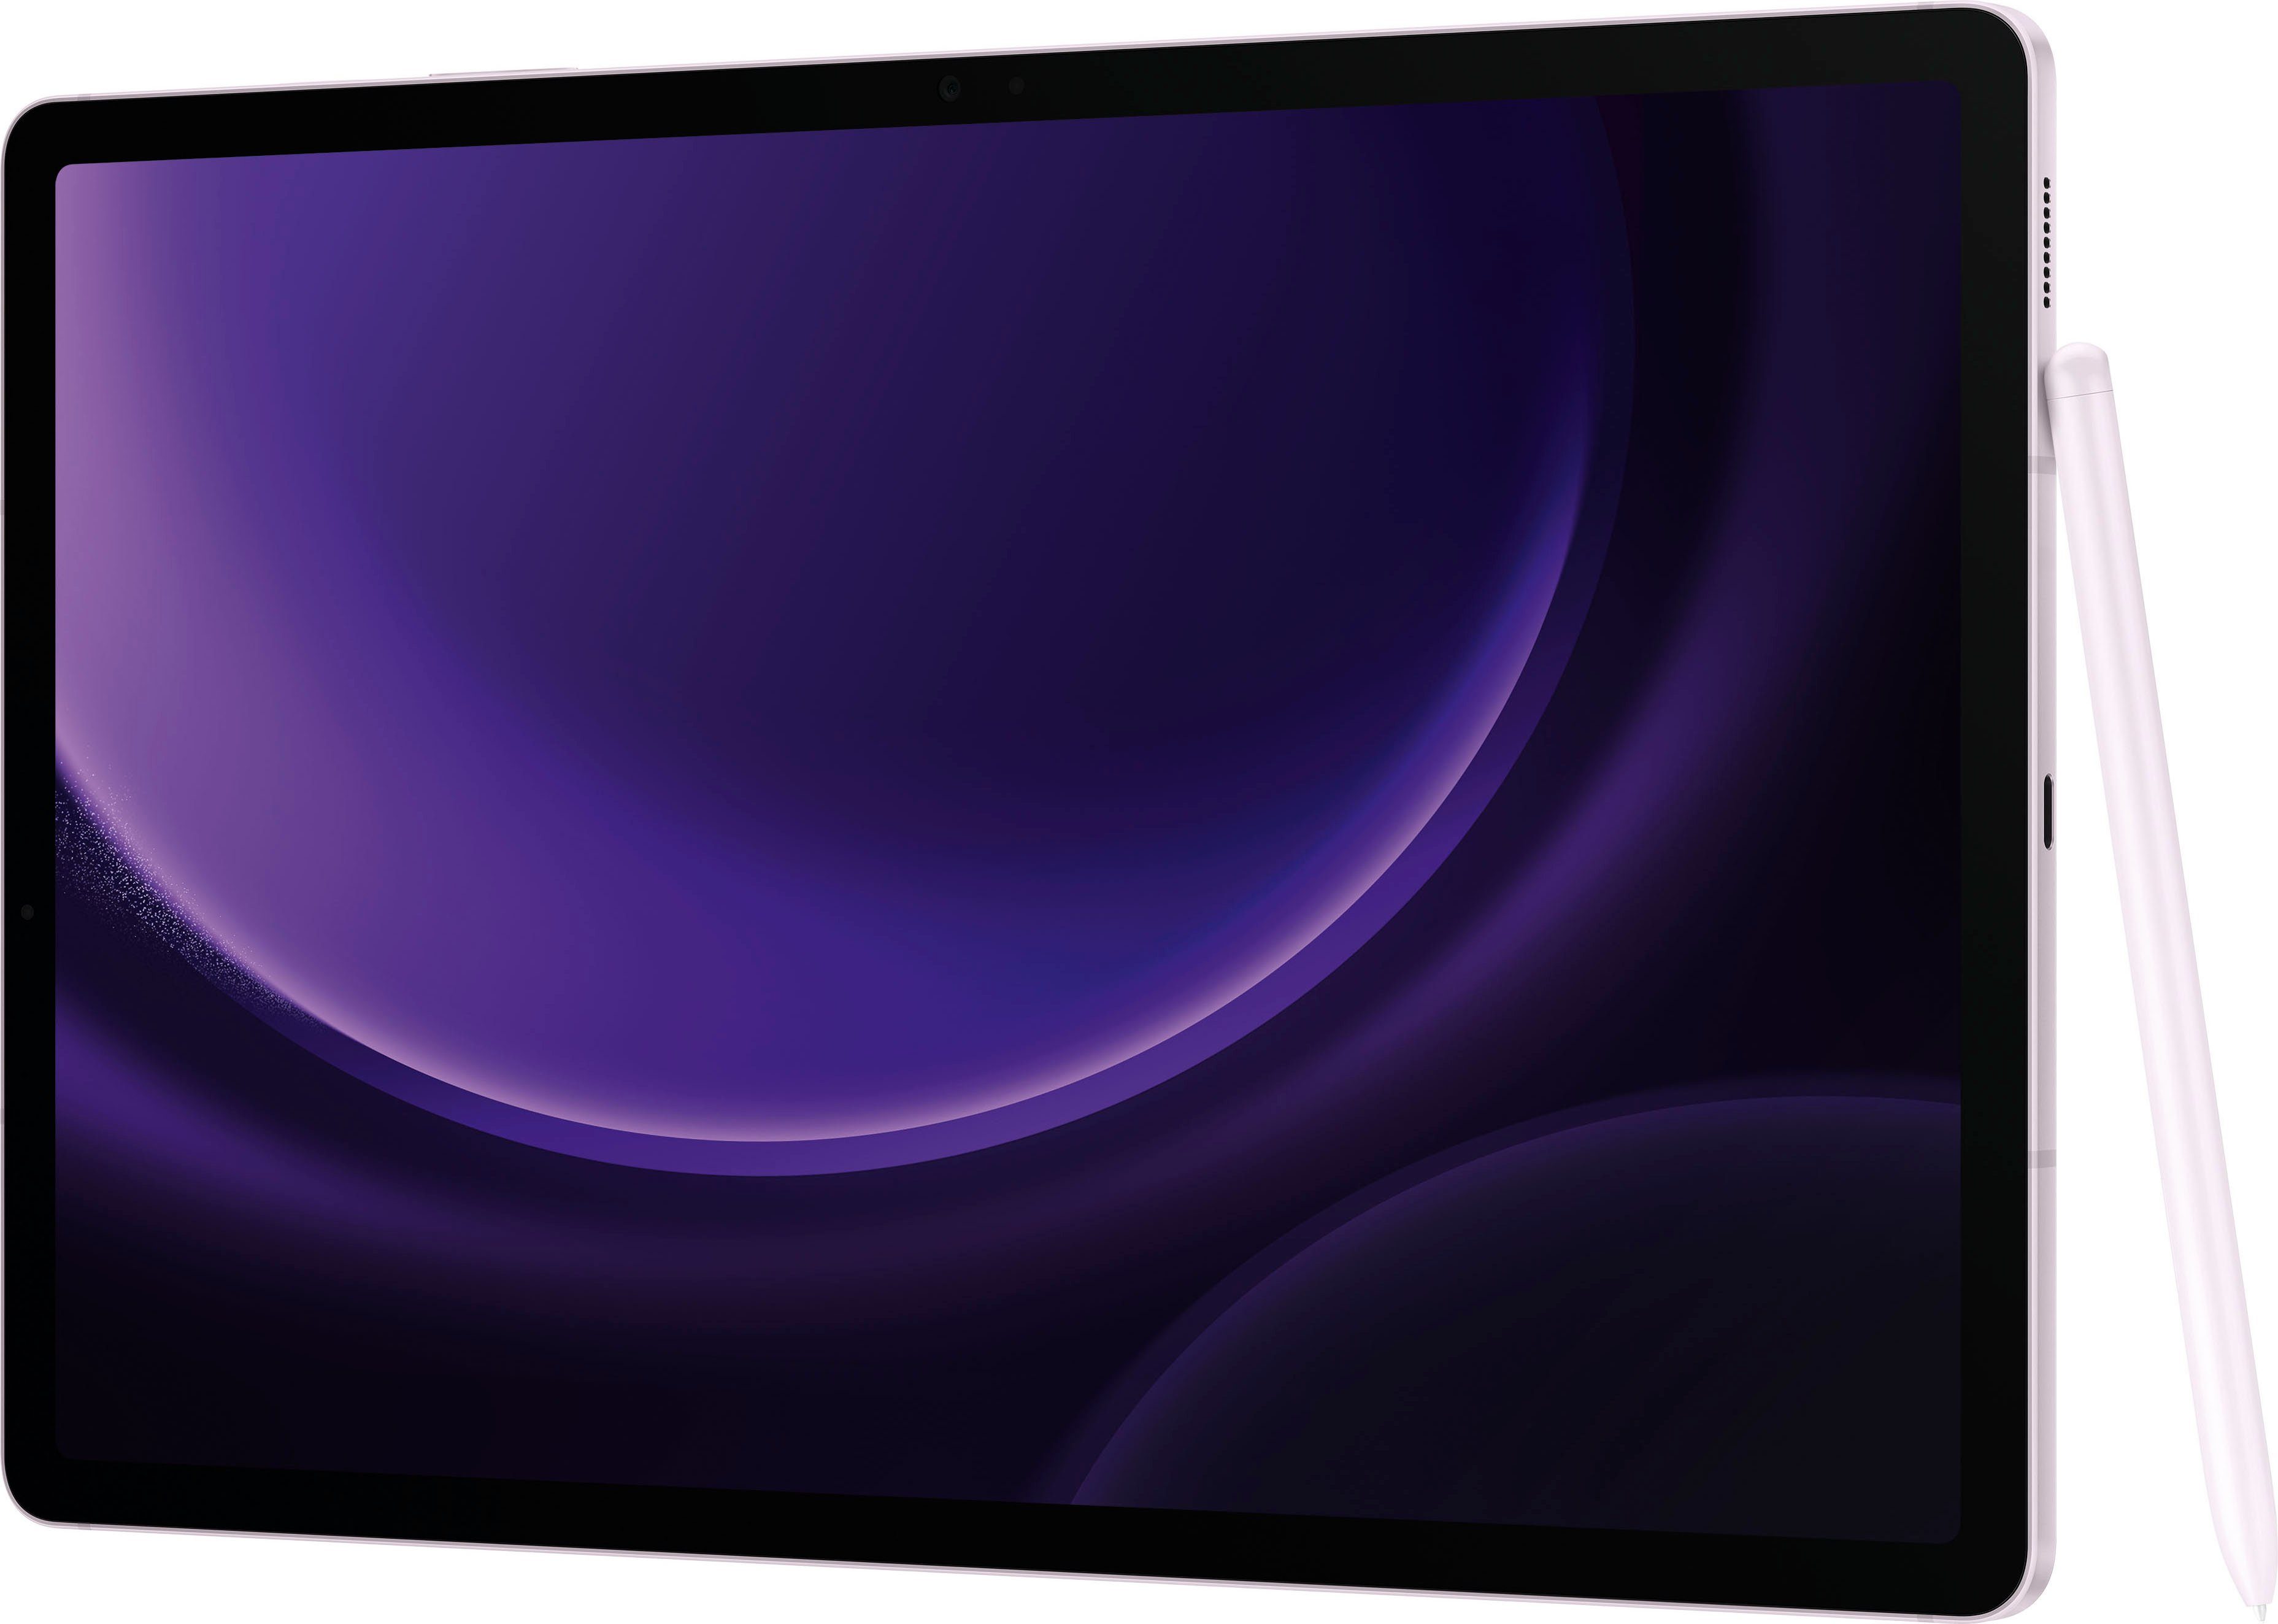 FE+ 128 5G Lavender GB, Samsung Tab Android,One 5G) Galaxy (12,4", UI,Knox, Tablet S9